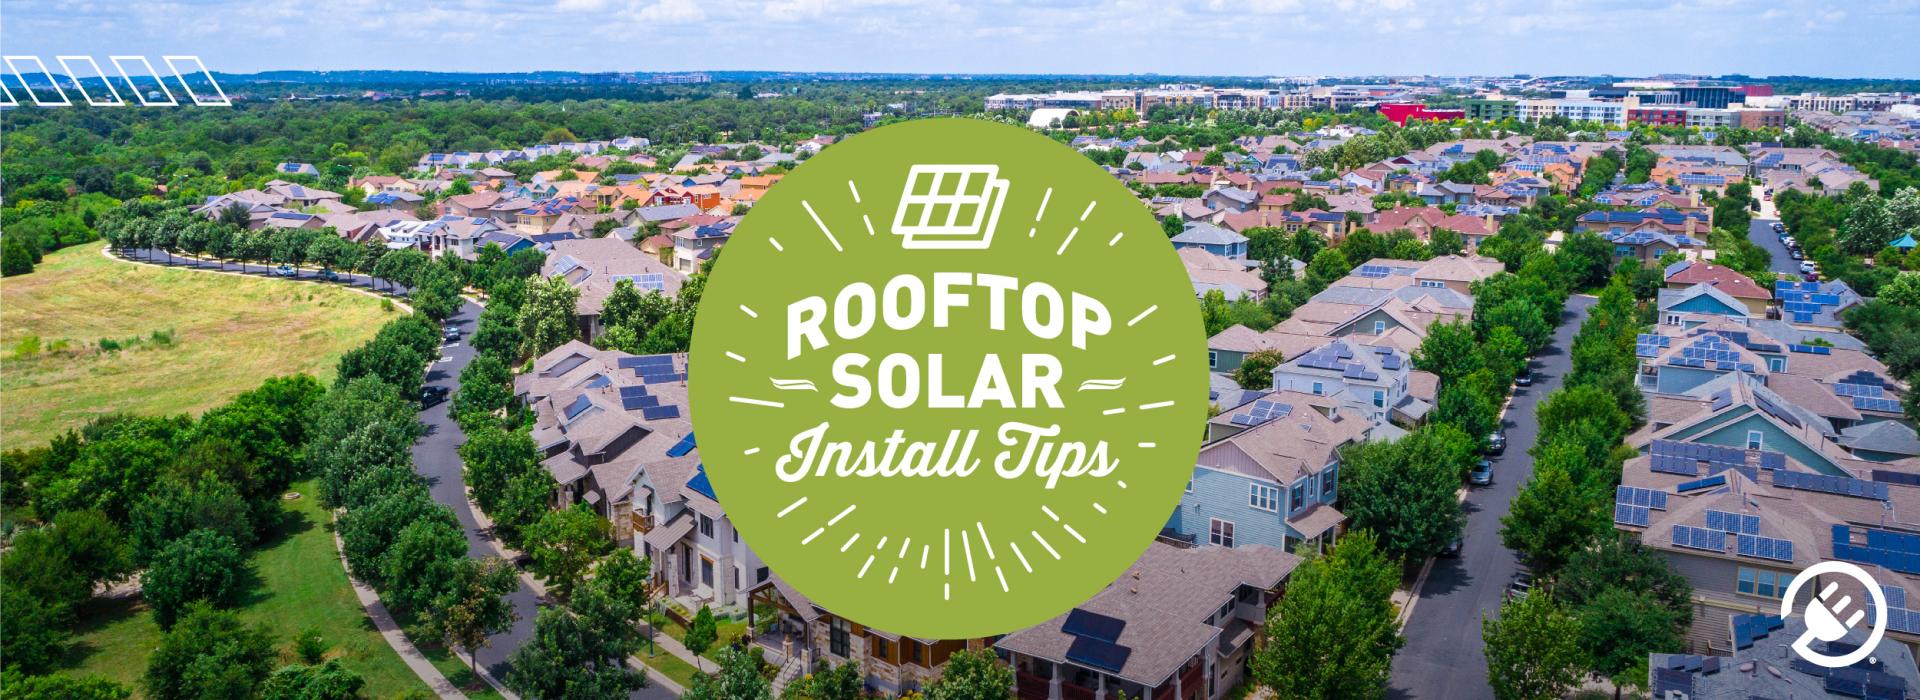 rooftop solar tips